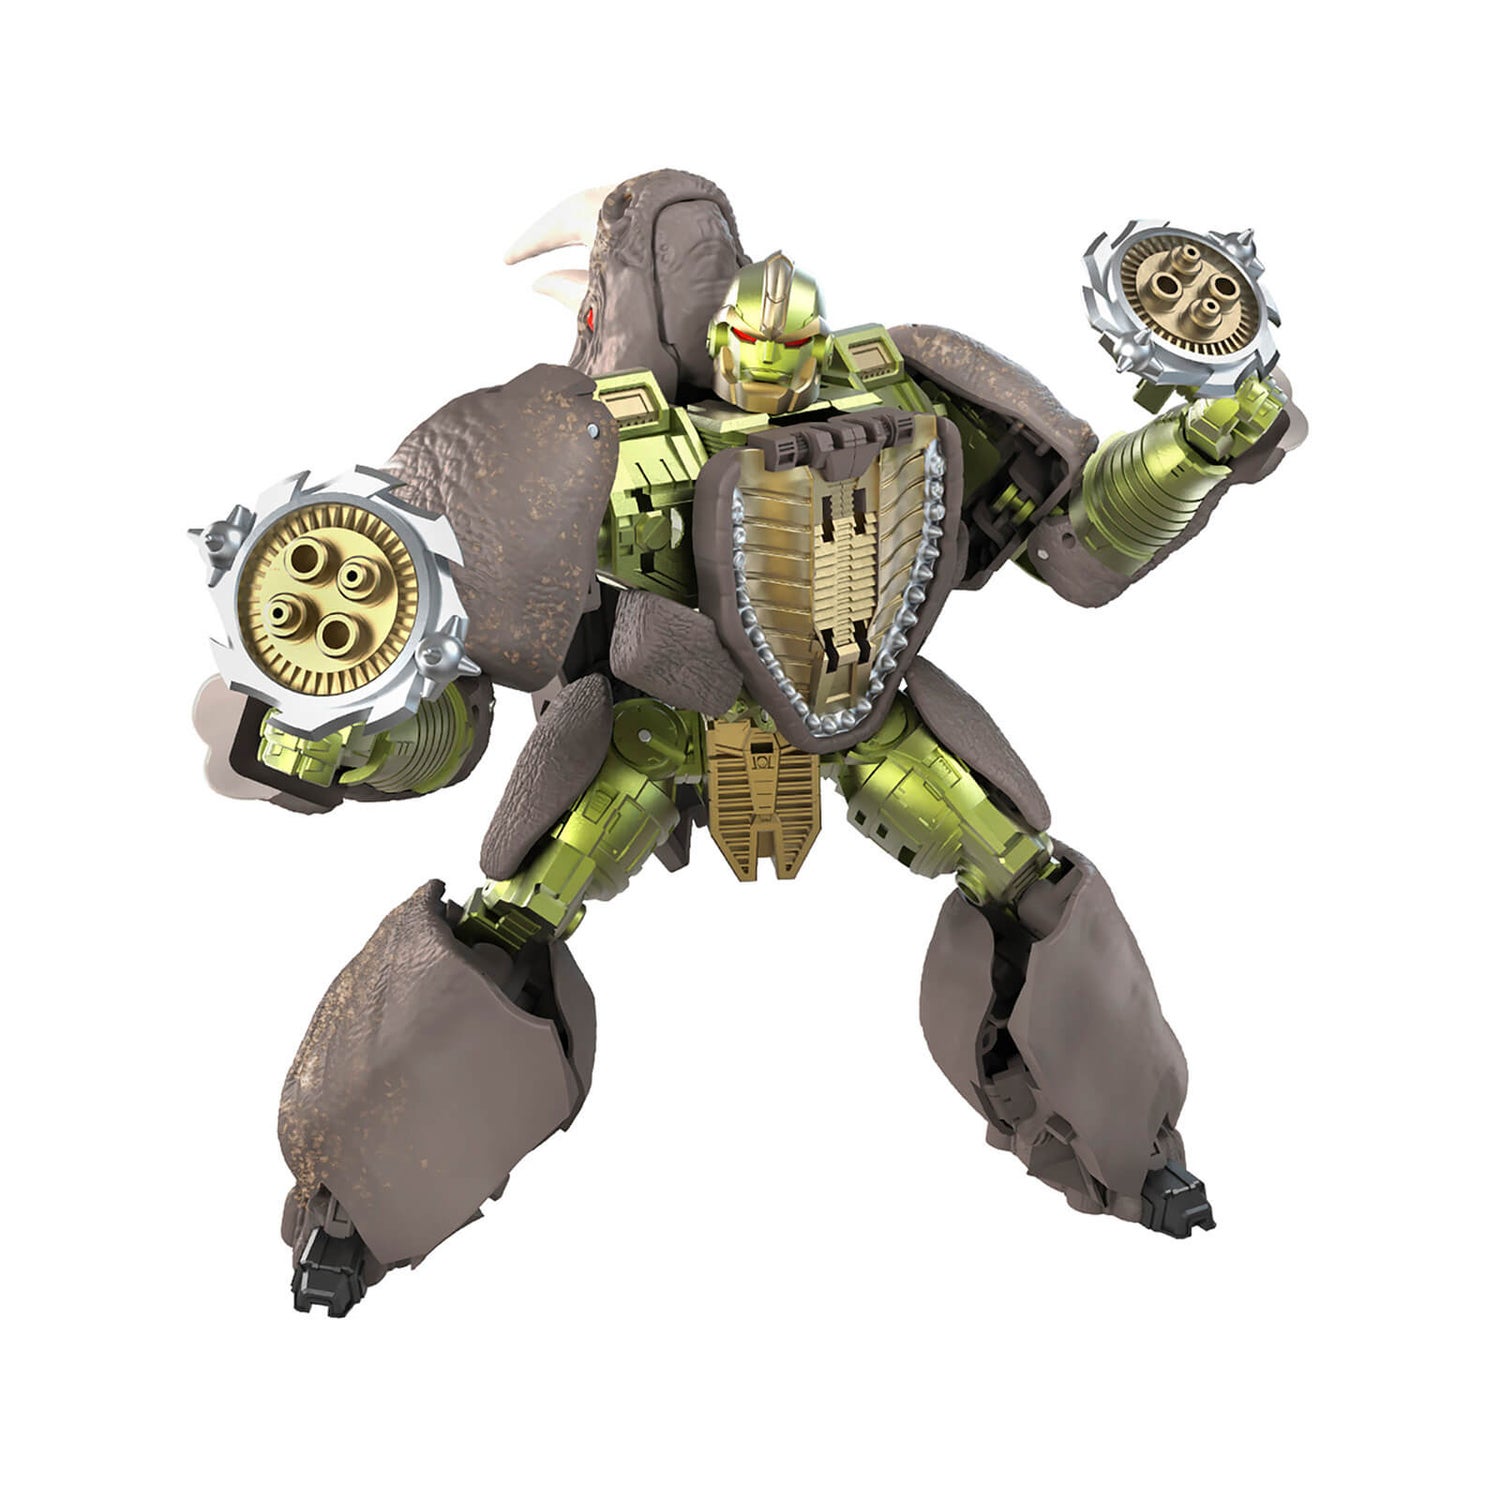 Hasbro Transformers Generations War for Cybertron: Kingdom Voyager WFC-K27 Rhinox Action Figure